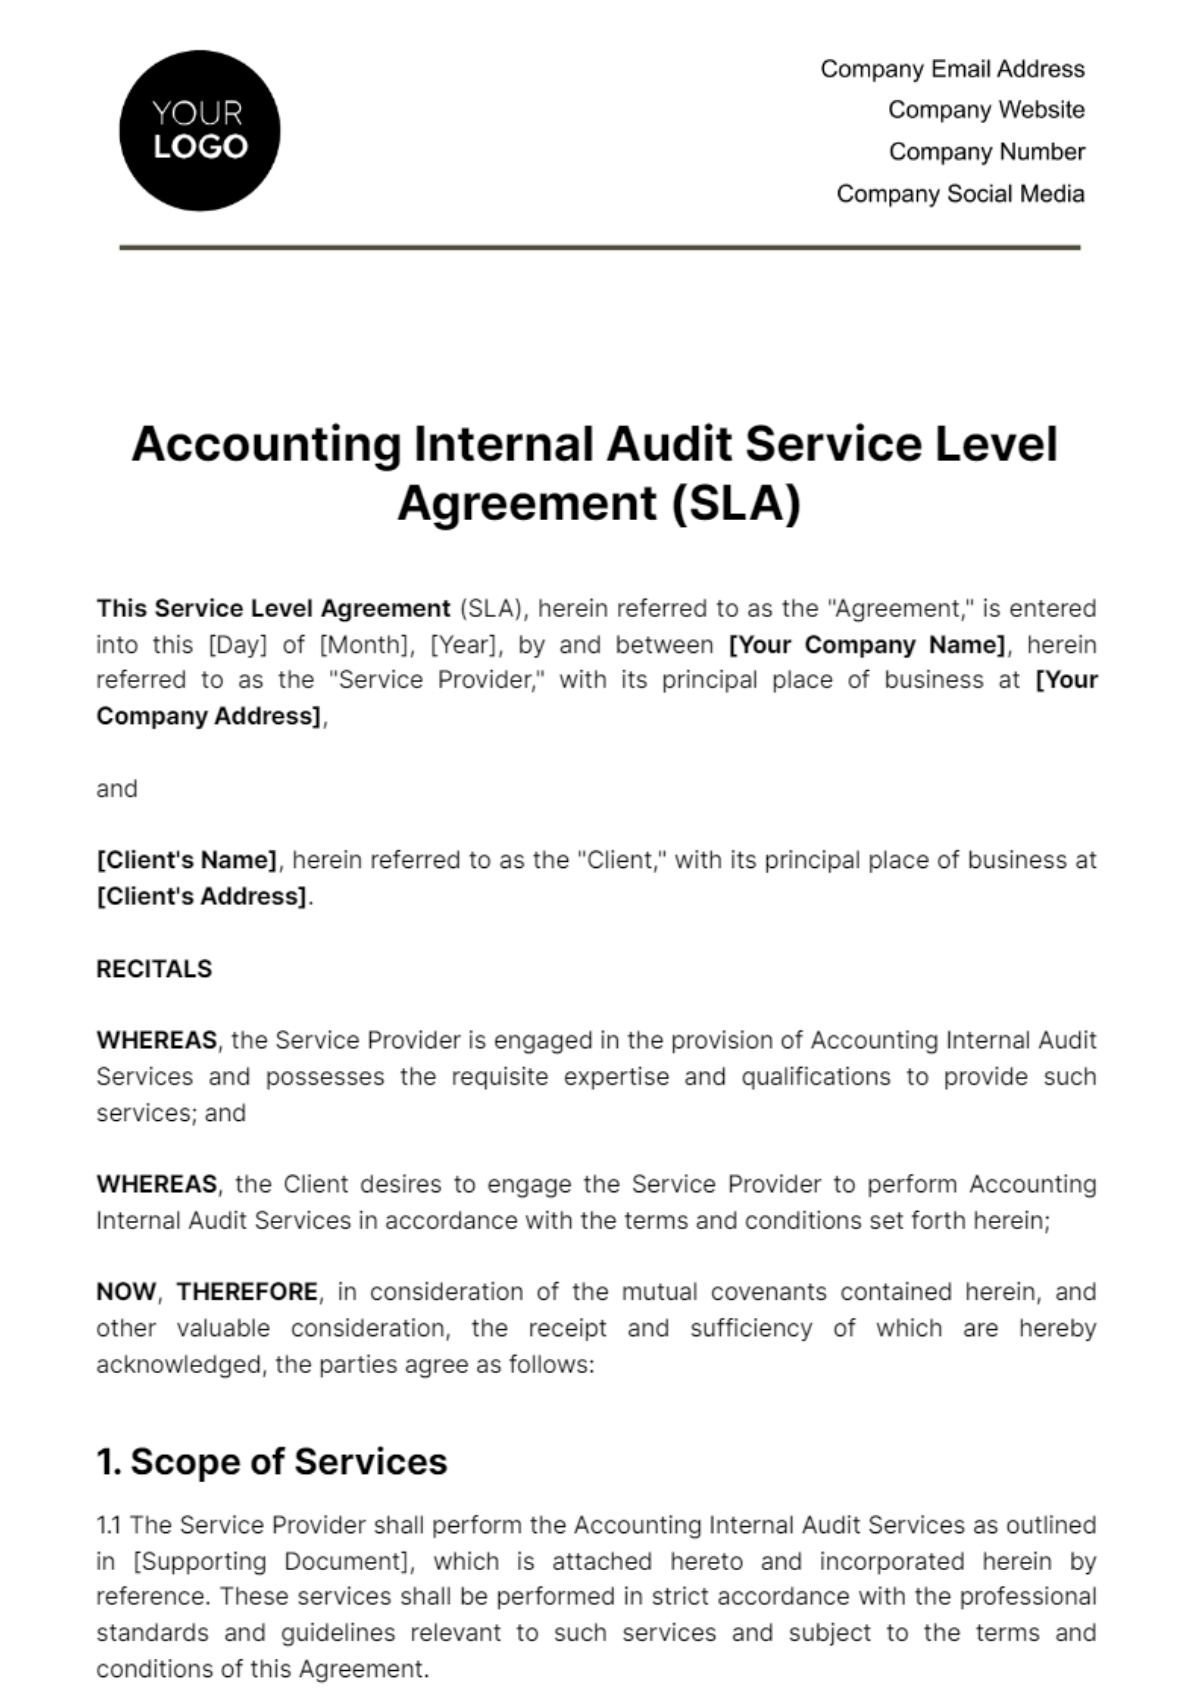 Accounting Internal Audit SLA Template